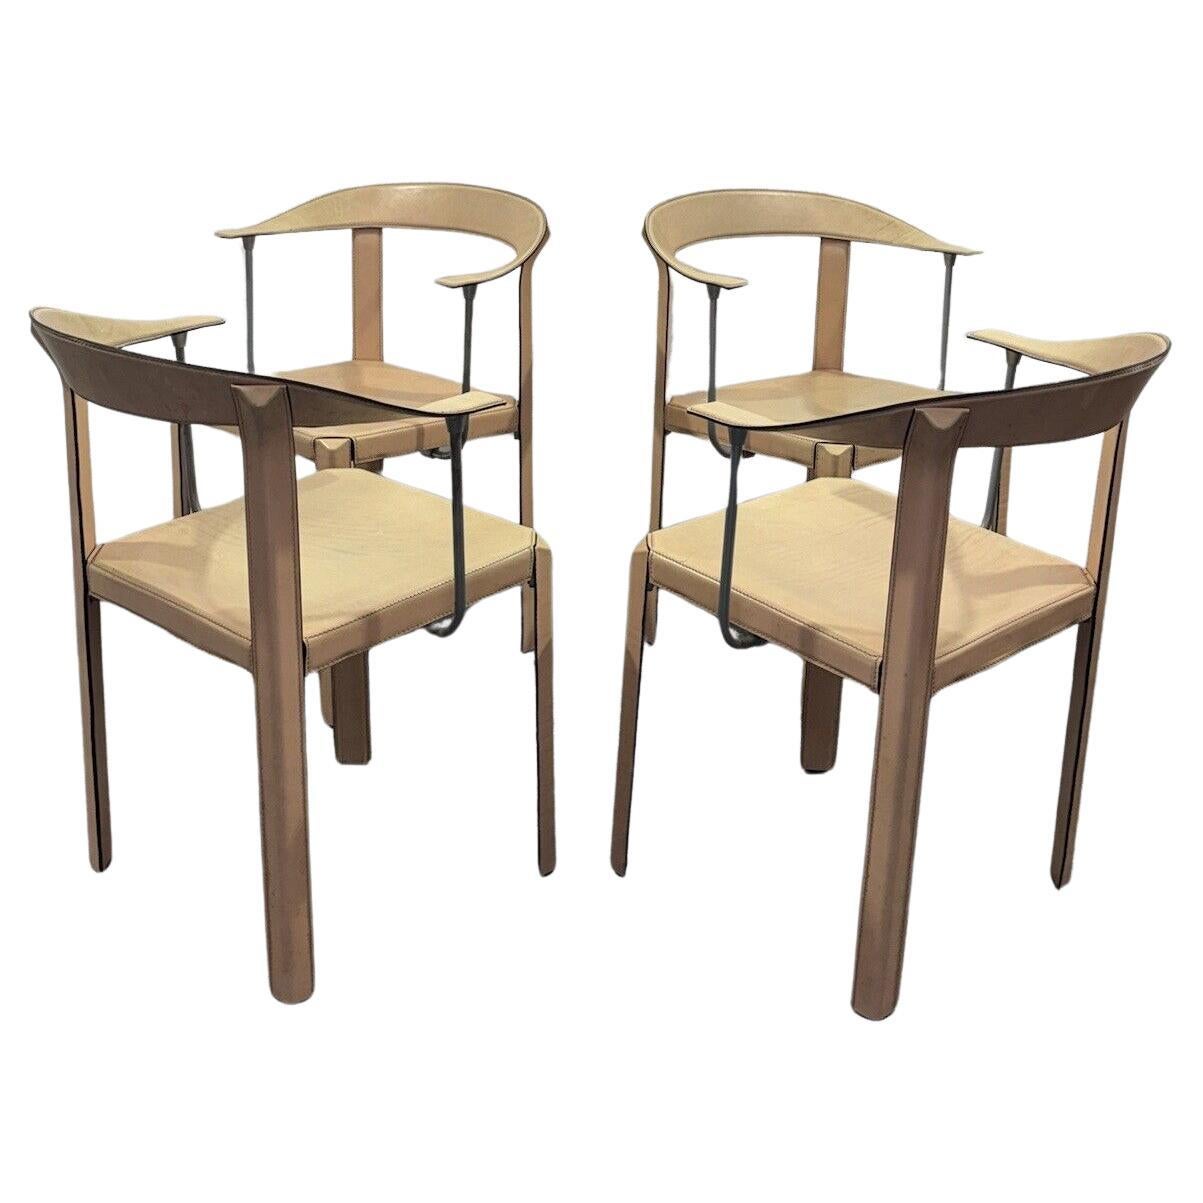 Antonello Mosca Ycami Set de 4 fauteuils 1980's Modern Design